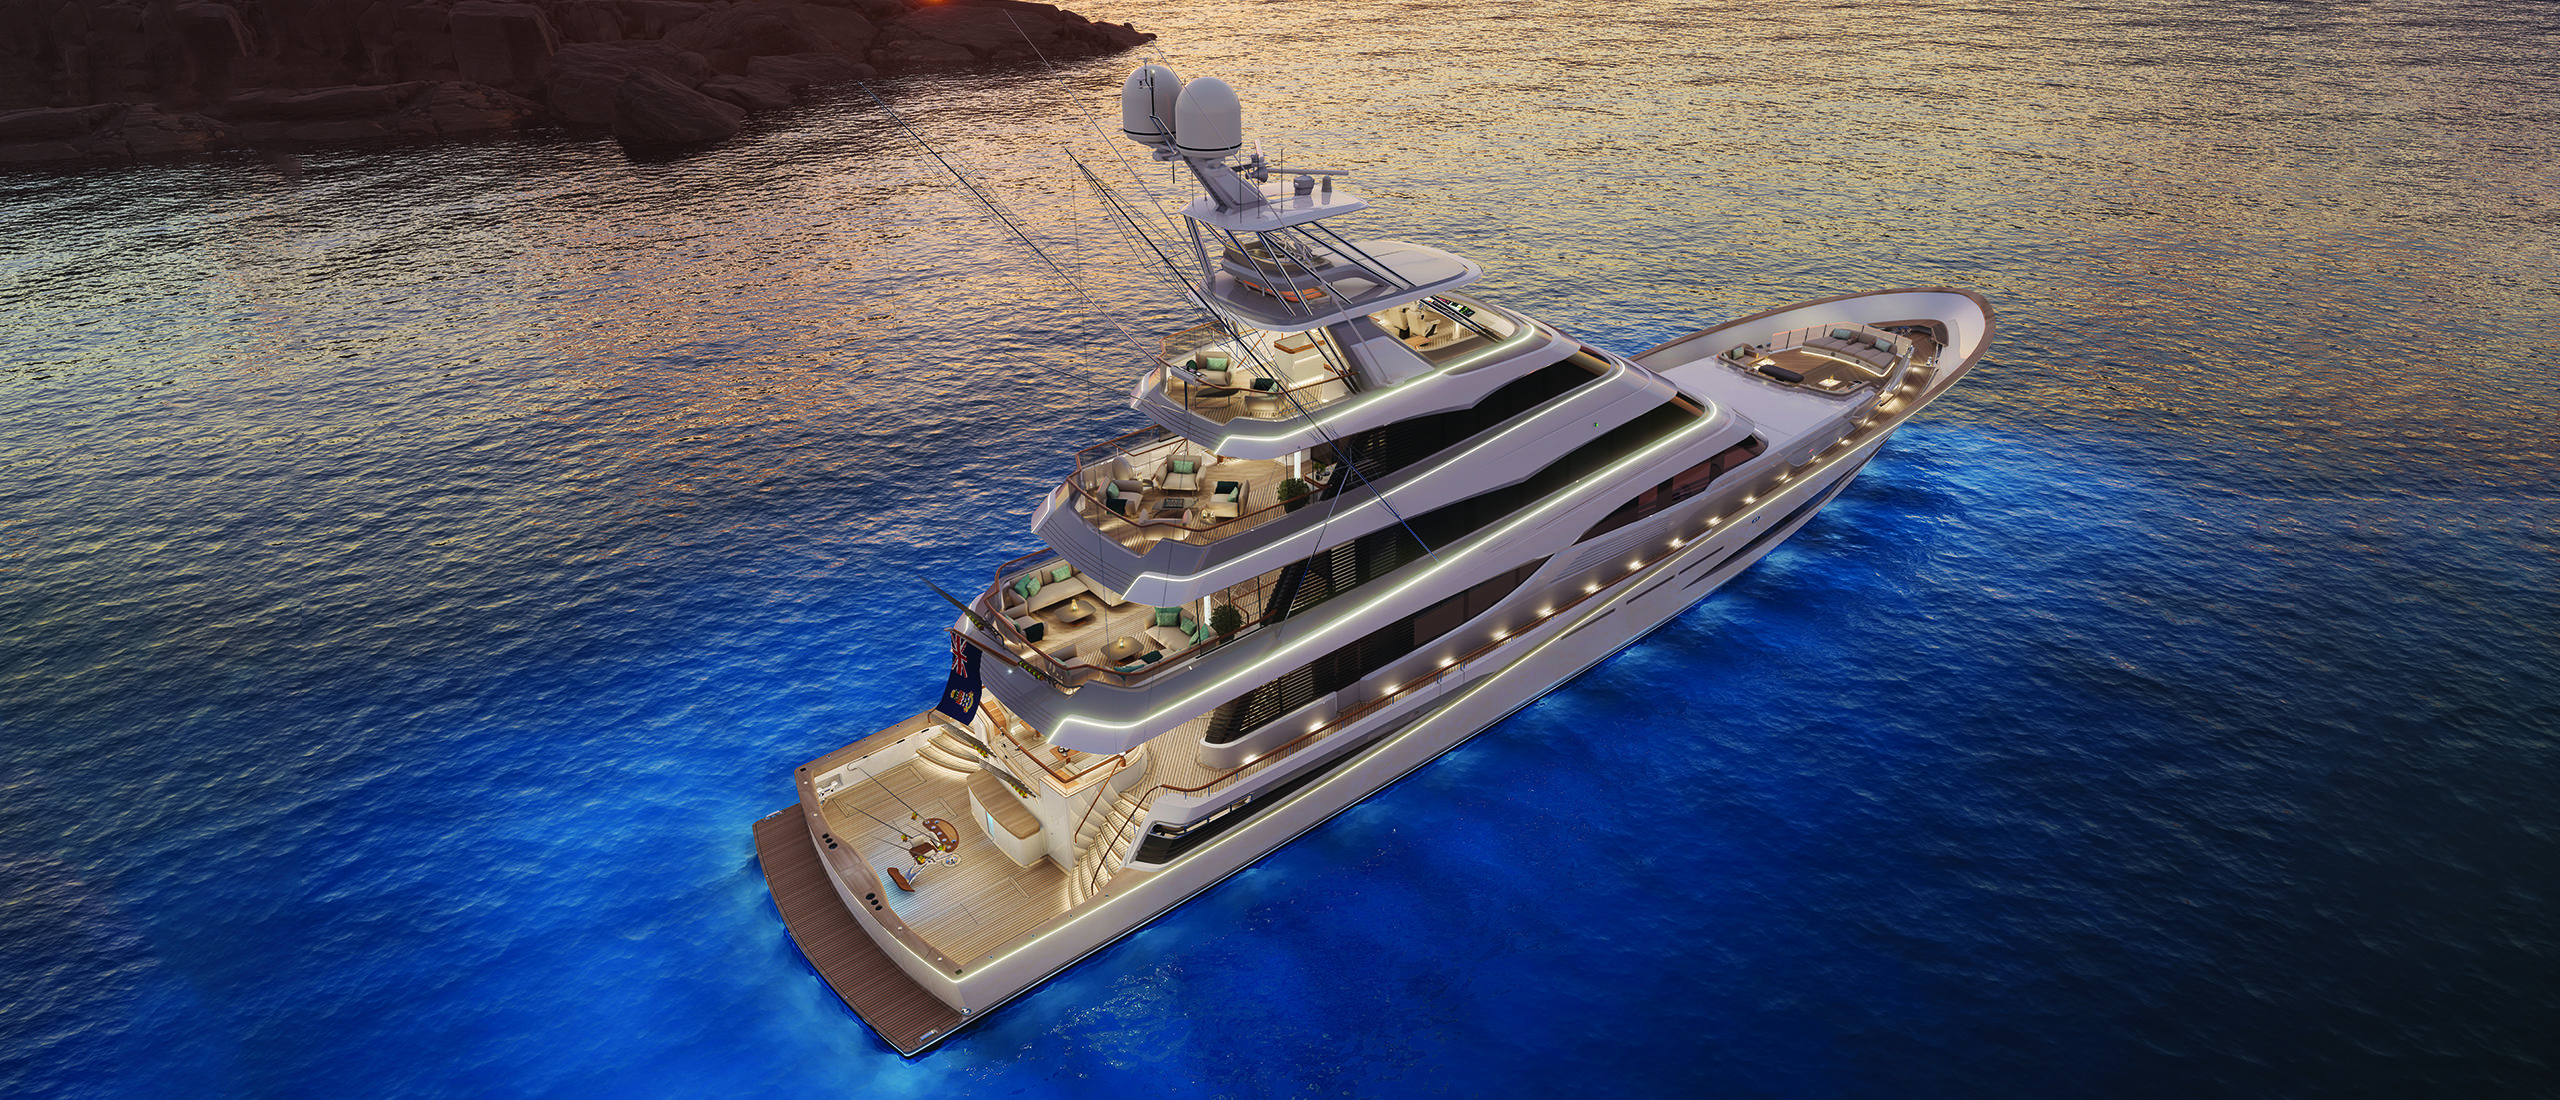 Project 406 - Sportfish - Vripack Yacht Design - Royal Huisman - Exterior - Top view right